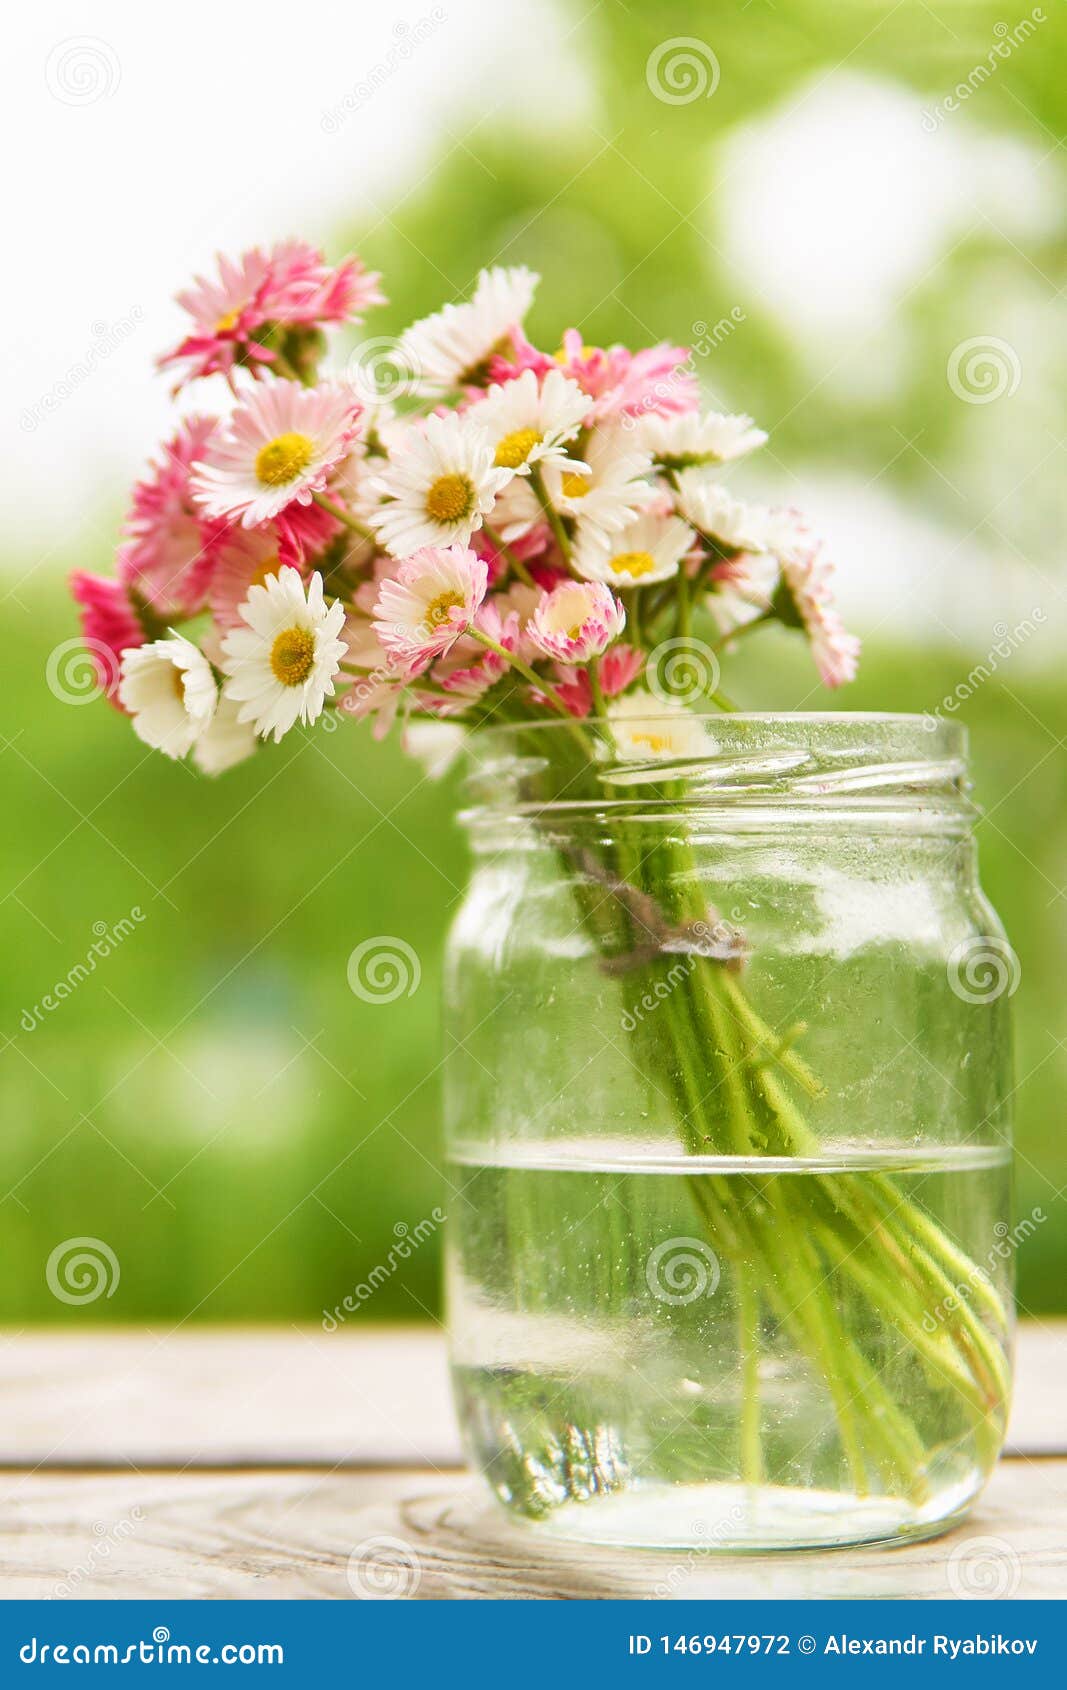 Dry Daisy Flowers Glass Jar On Stock Photo 785822056